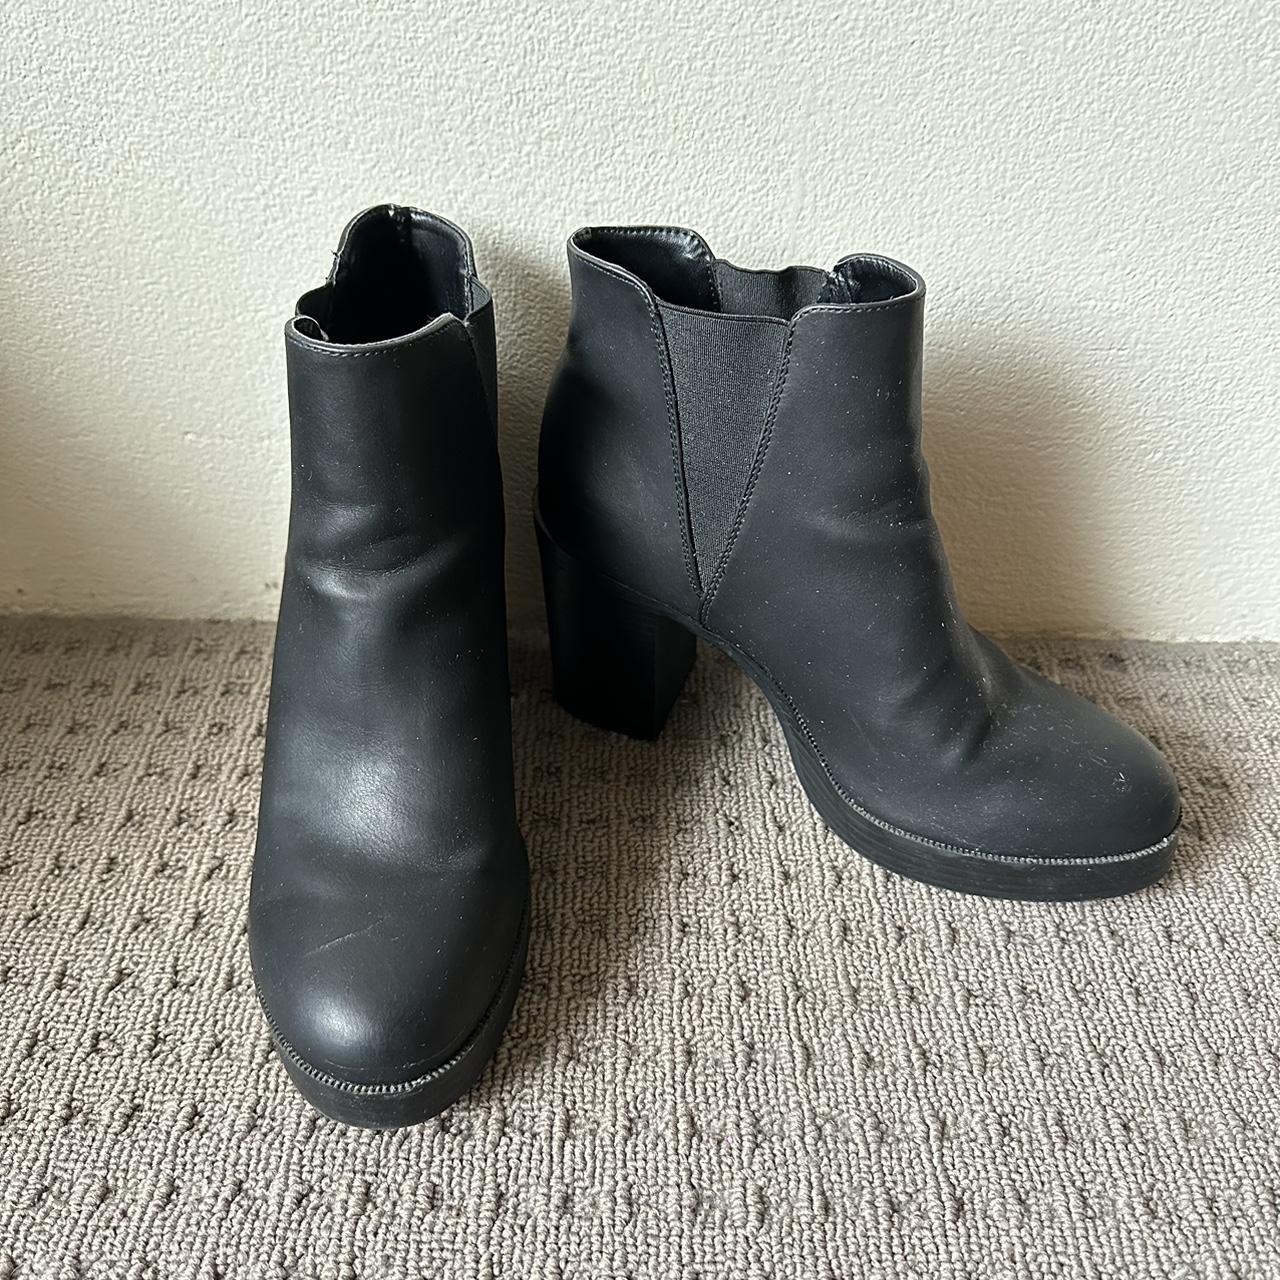 Black heeled boots - size 10 US women’s - Depop